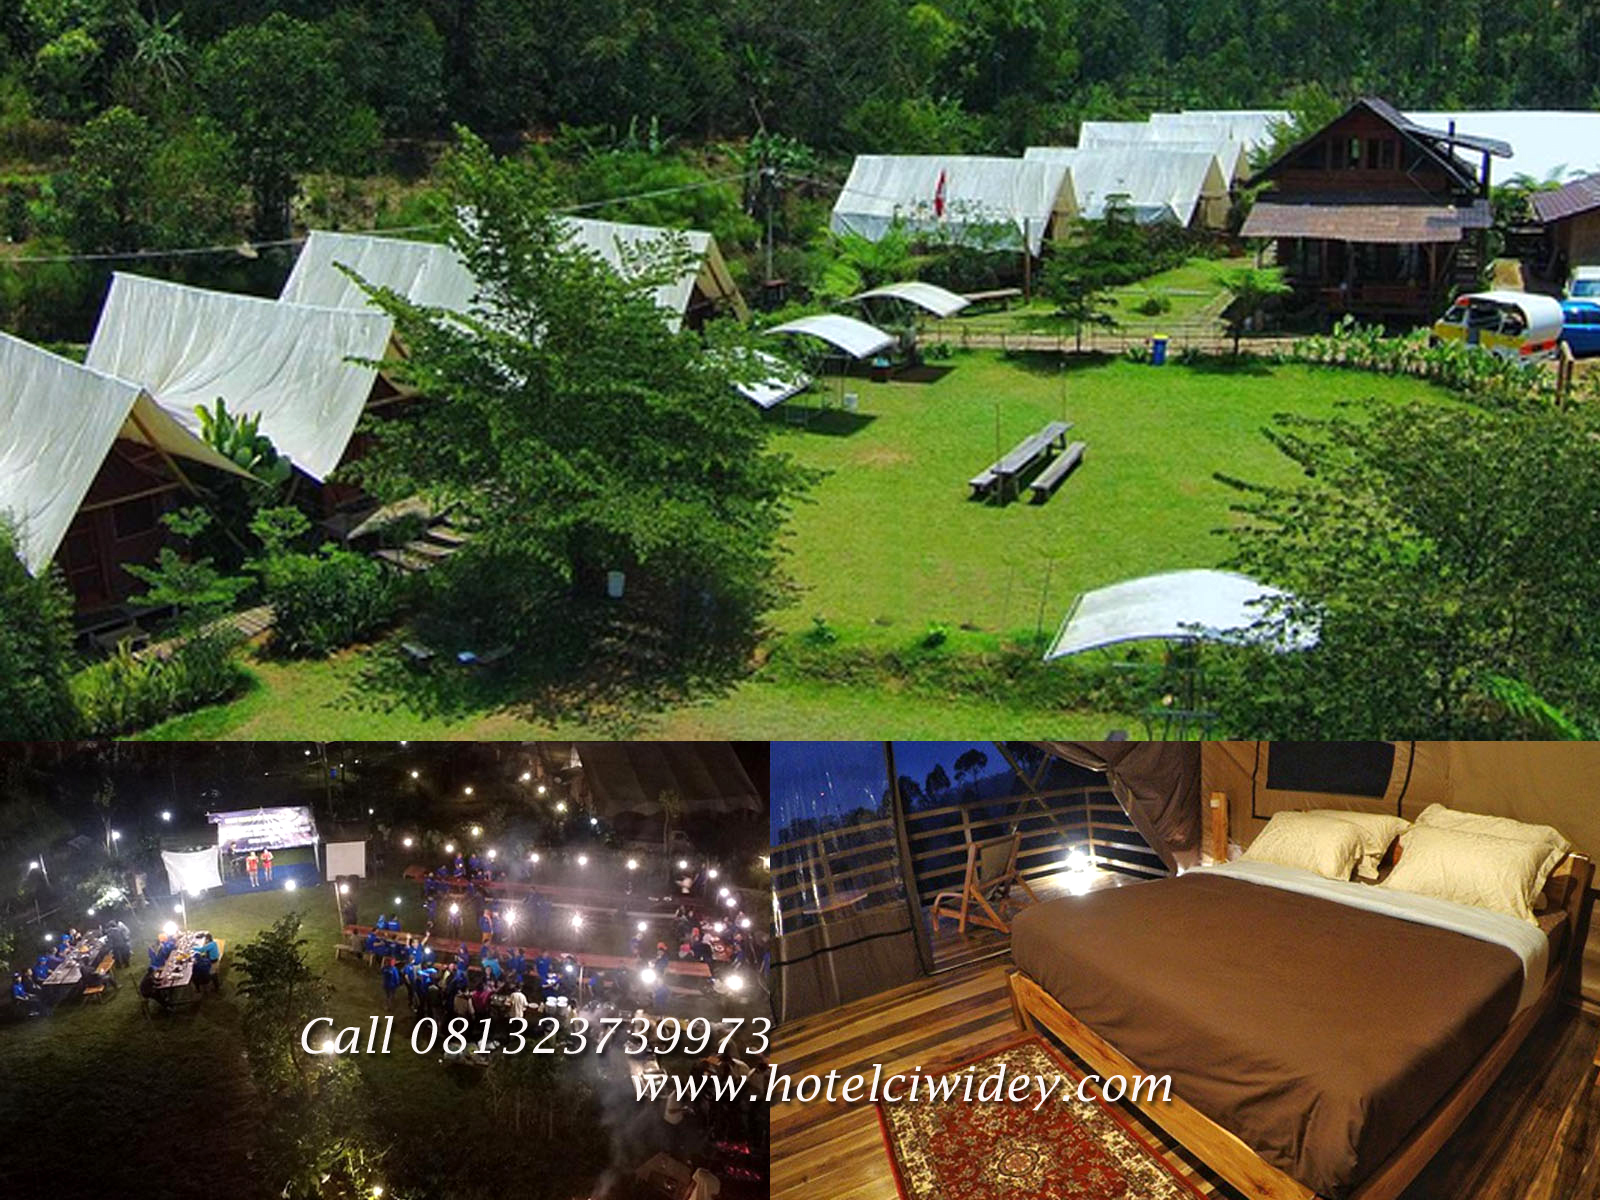 Hotel Camping Di Ciwidey - HotelCiwidey.Com